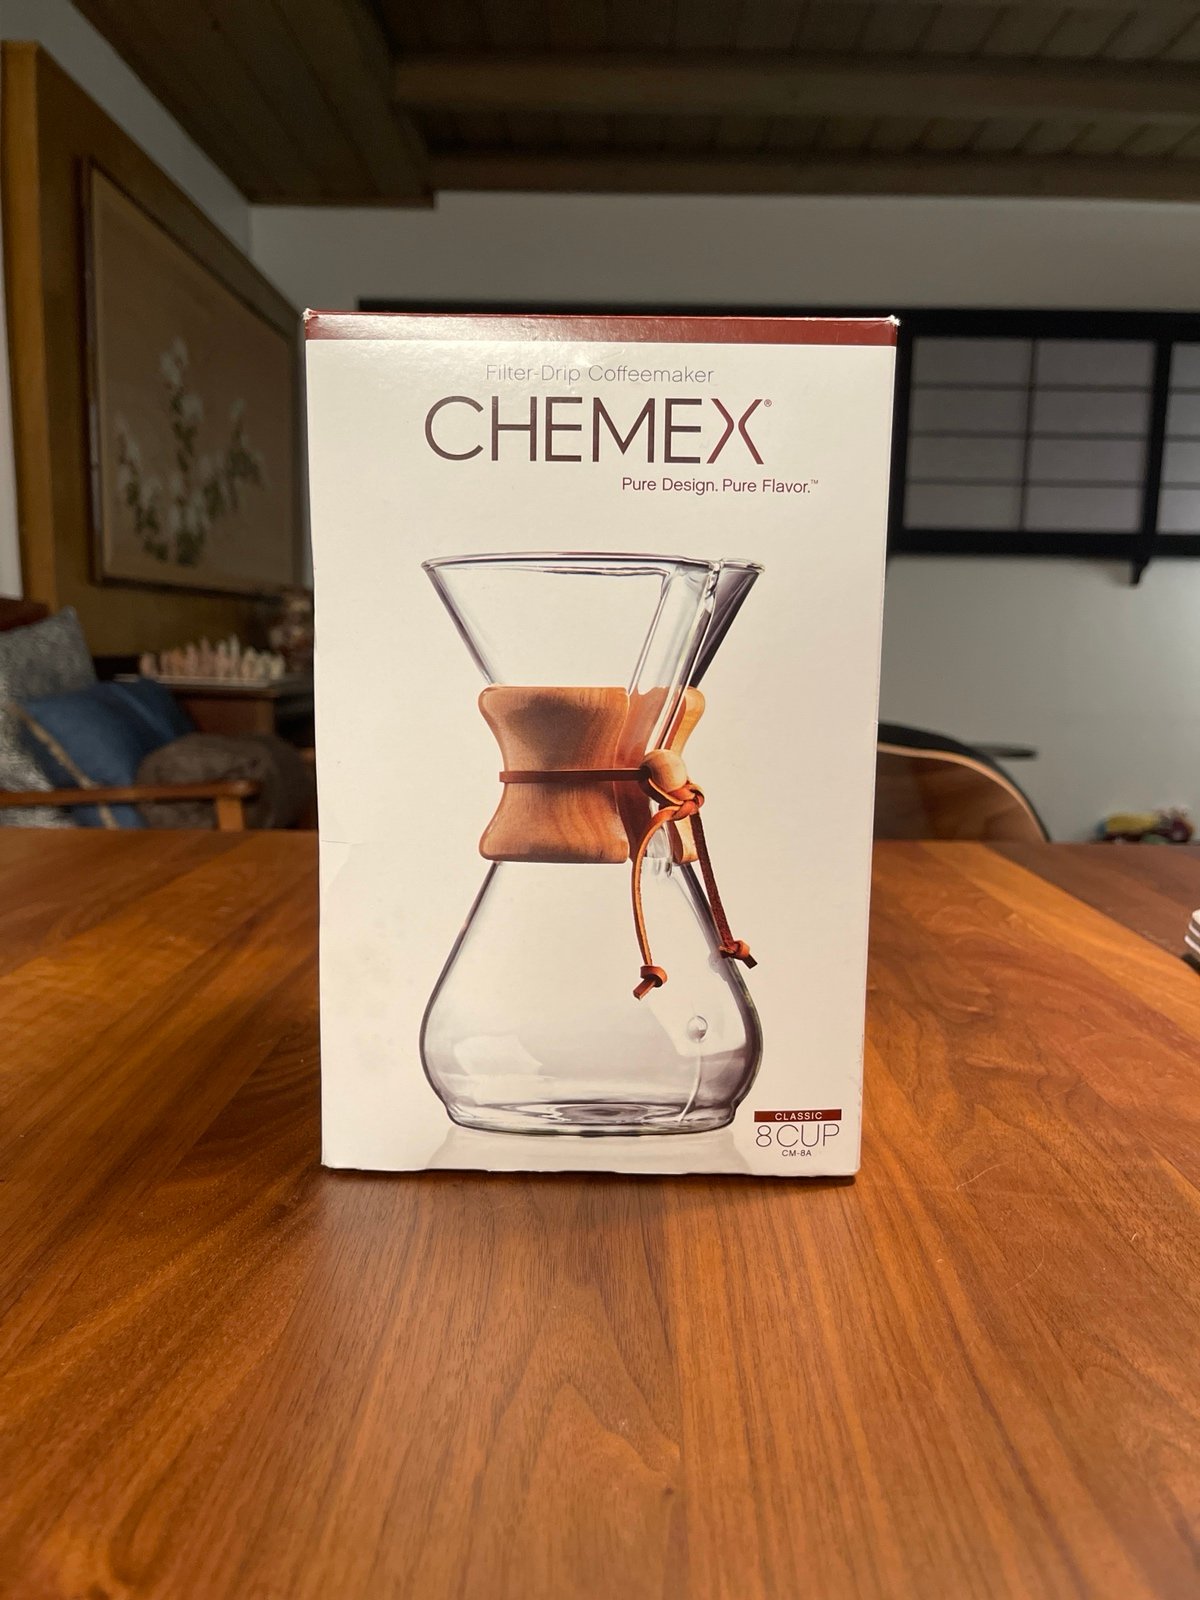 8-cup Chemex Drip Coffee Maker ngFHEhgs6